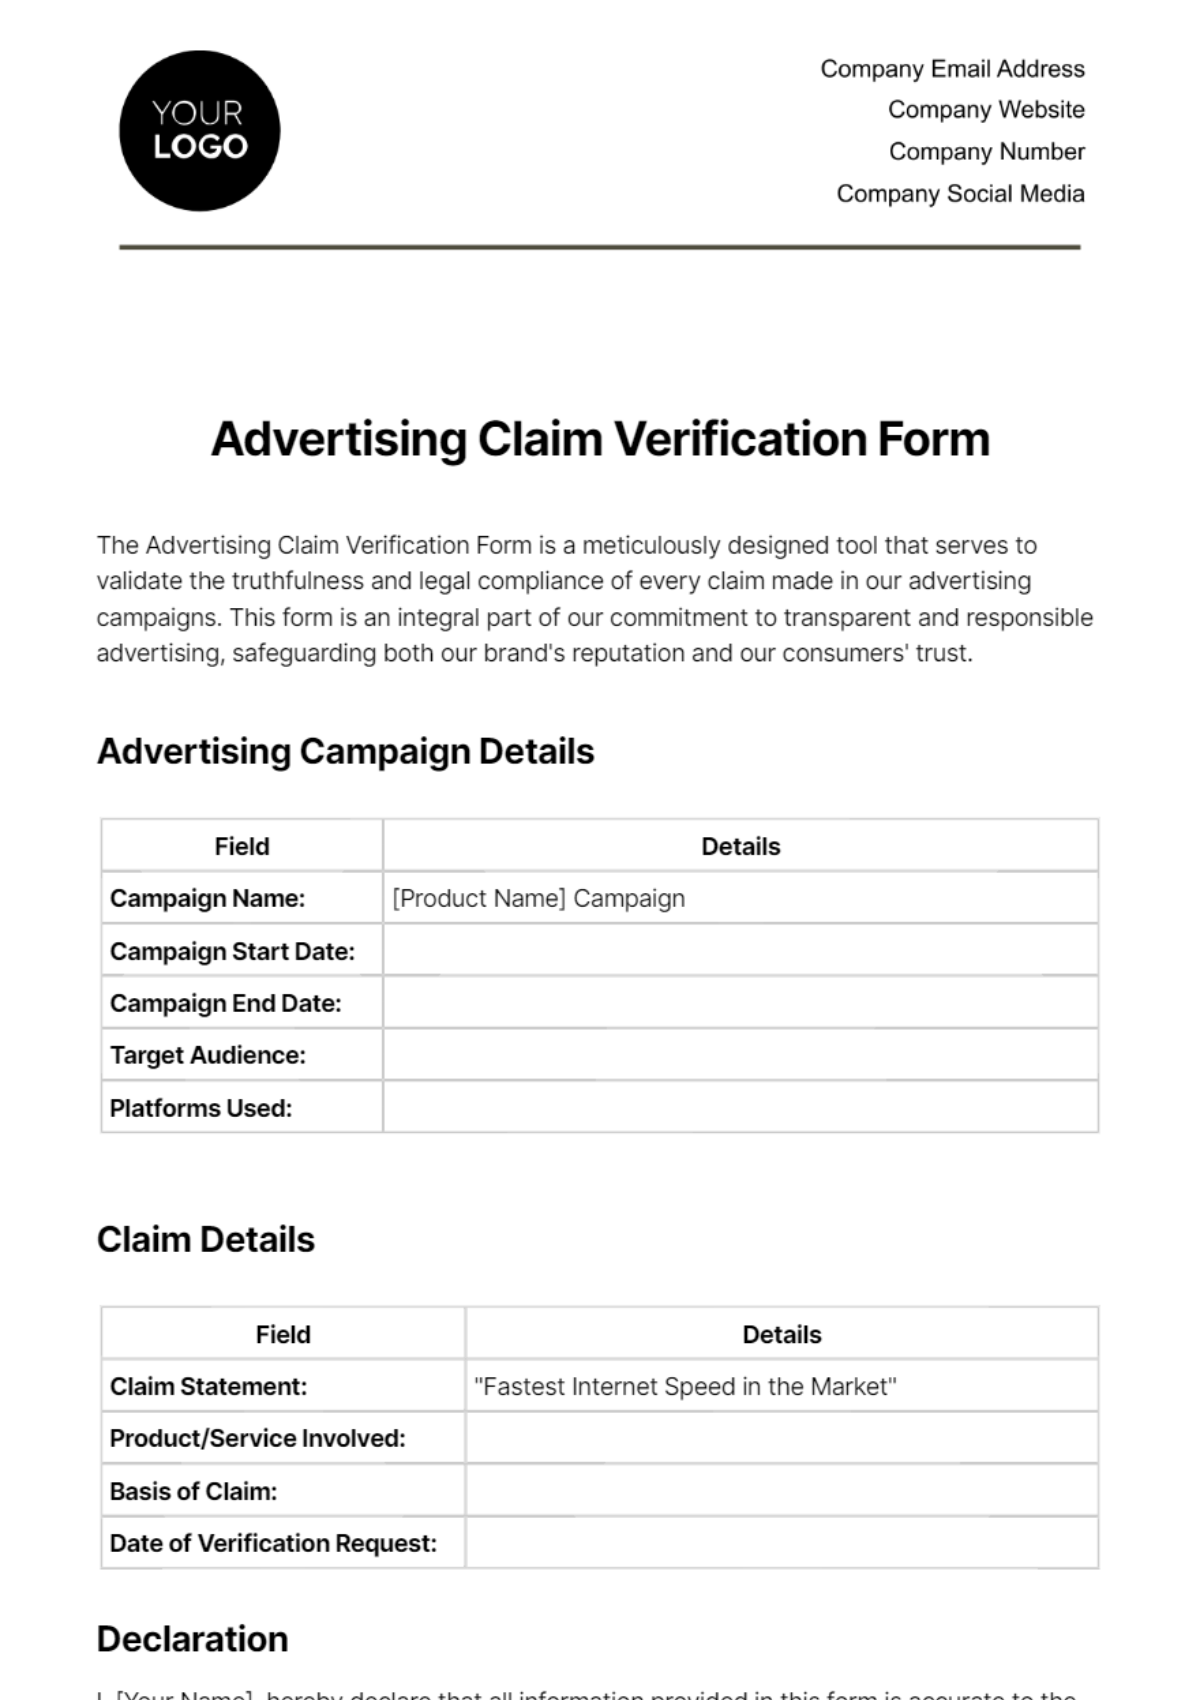 Advertising Claim Verification Form Template